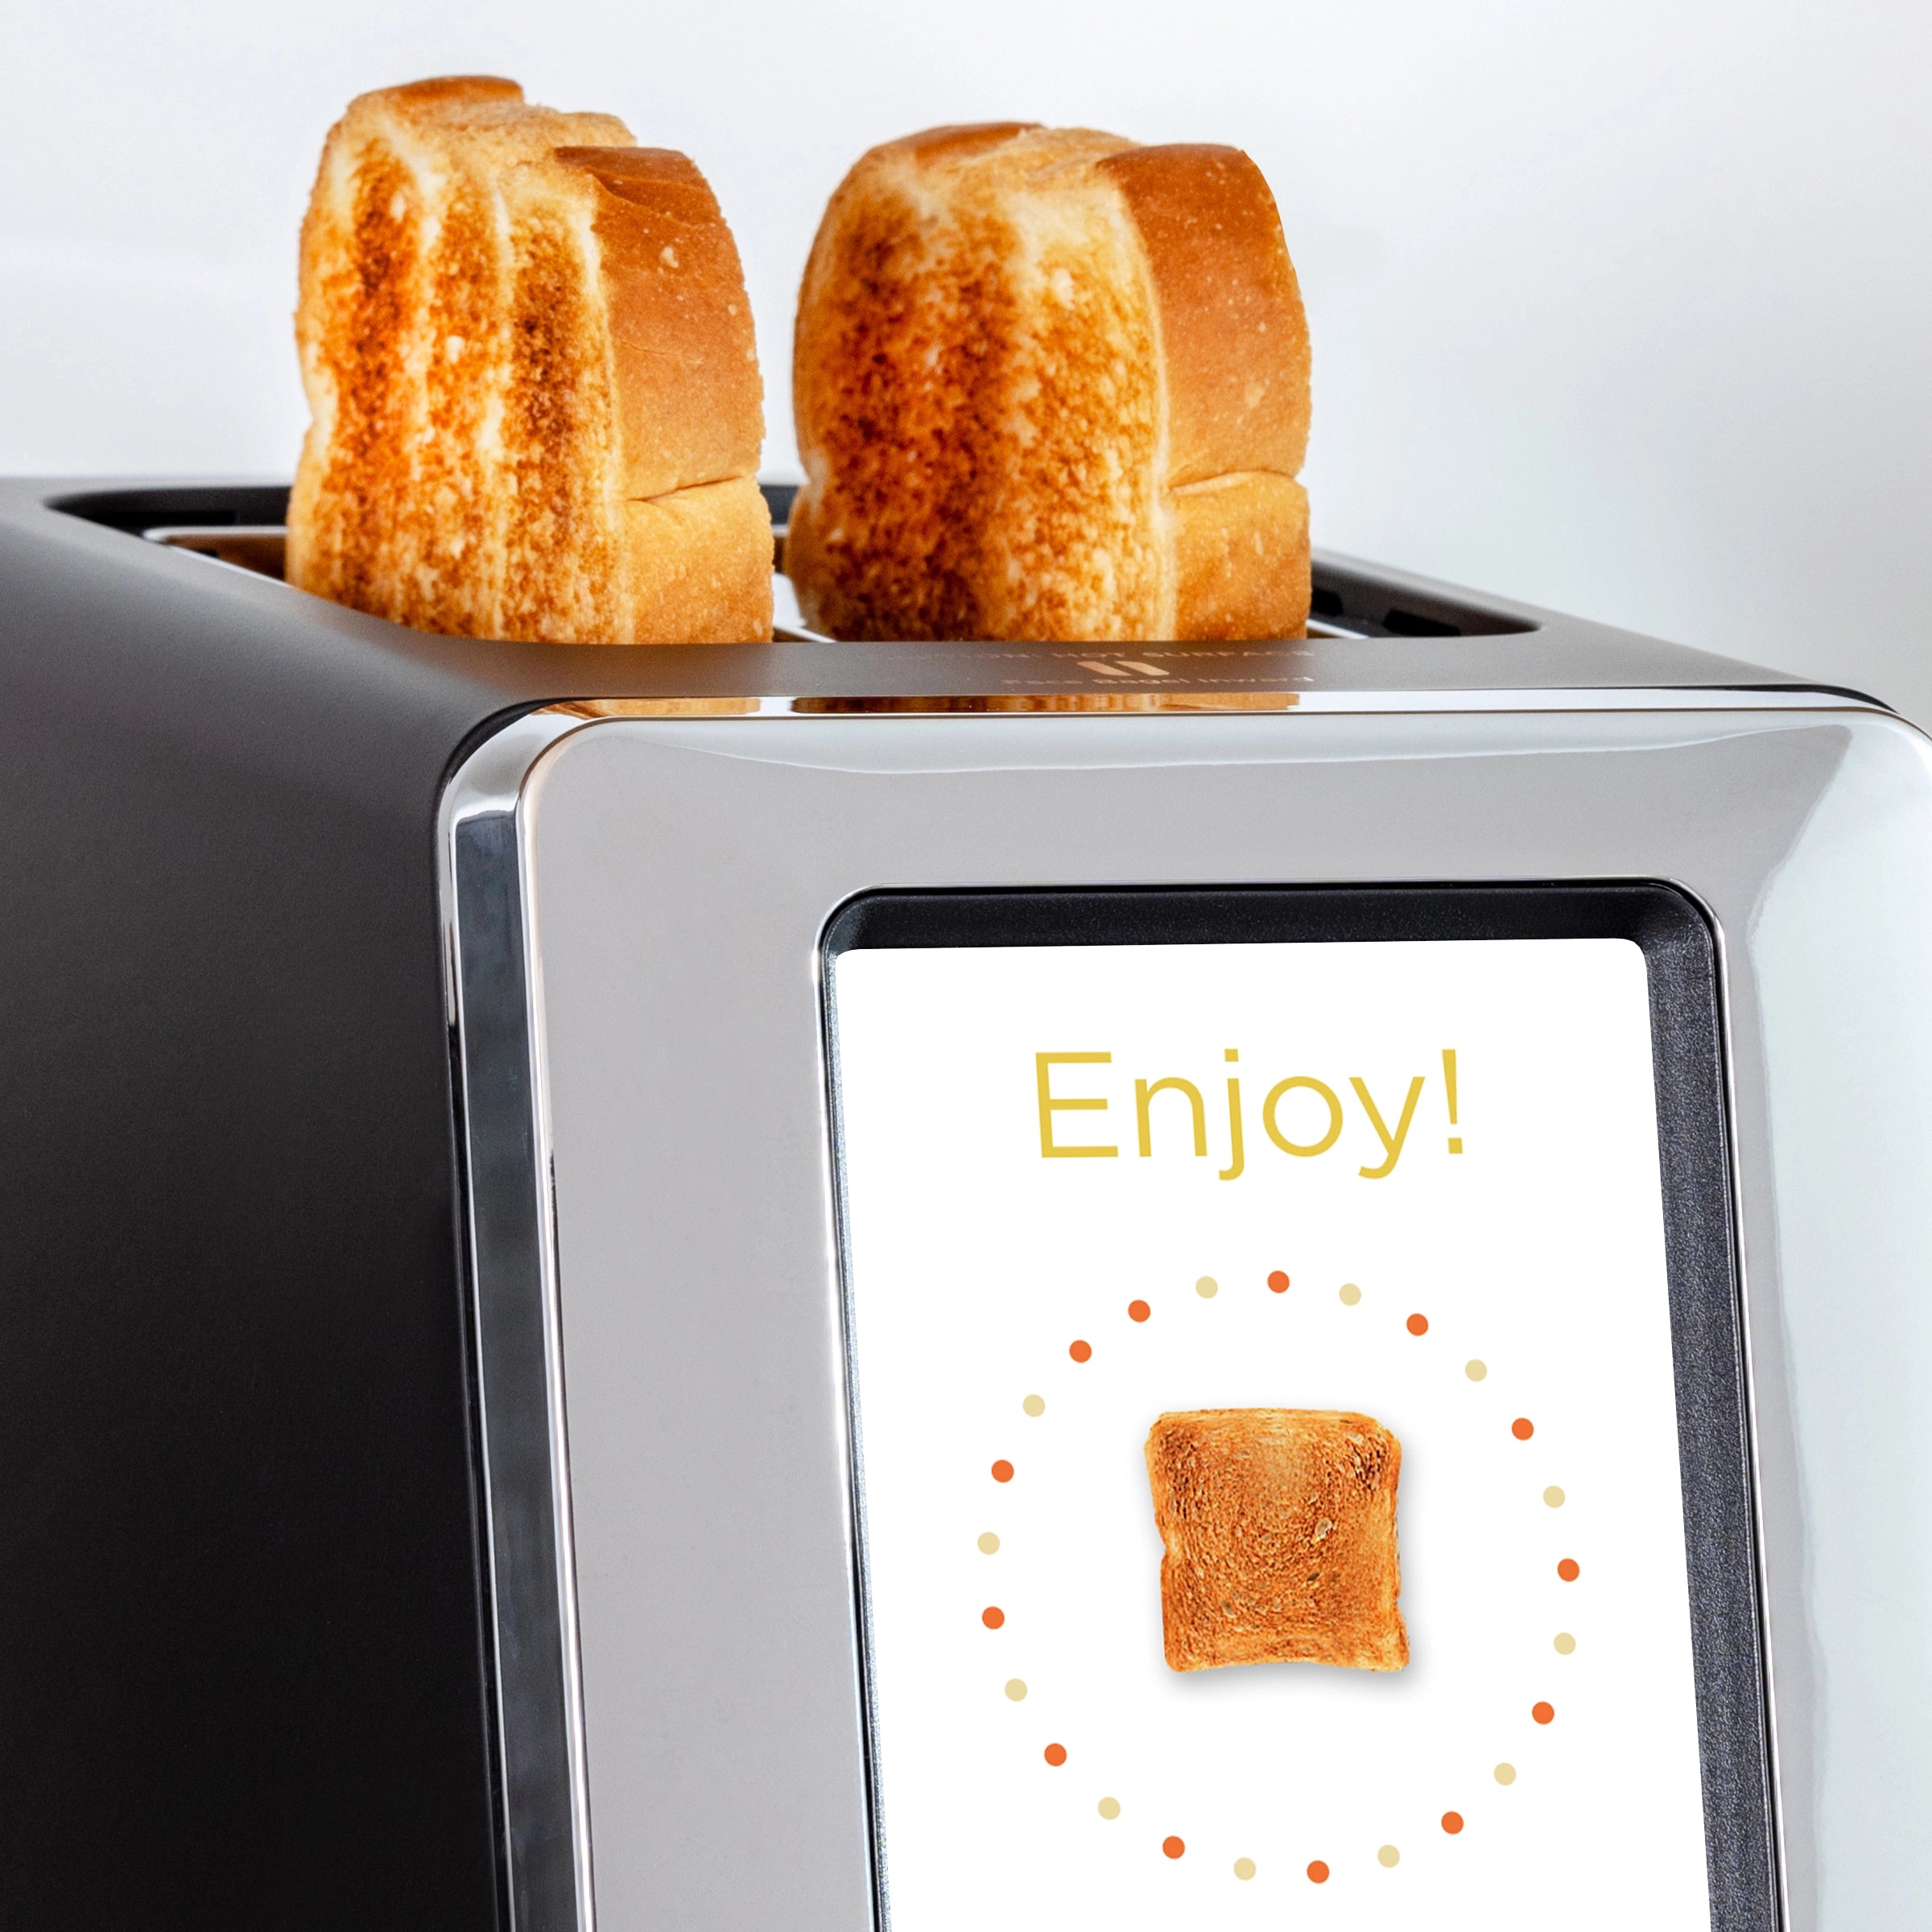 Revolution InstaGLO® R180 Toaster - Stainless Steel